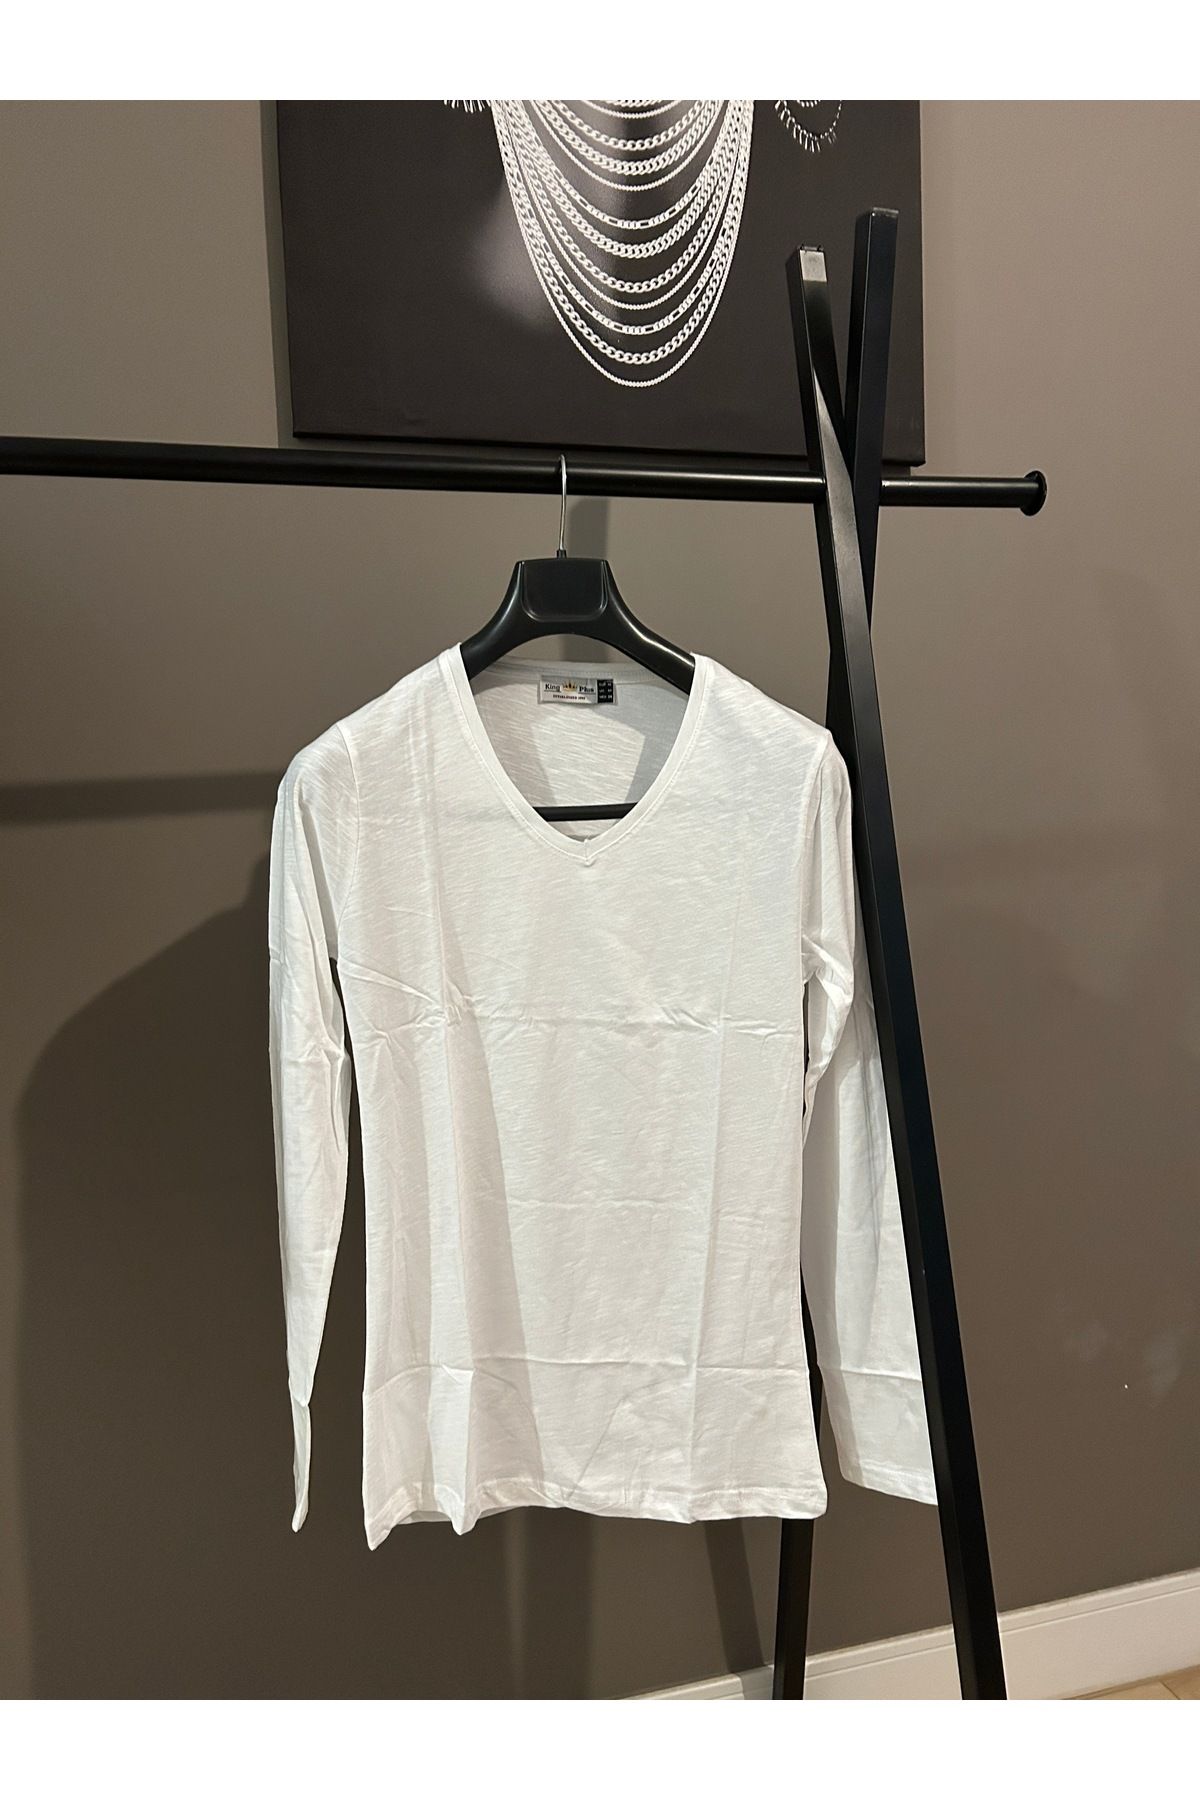 King Uzun Kollu Unisex V Yaka Oval Kesim Pamuklu Beyaz Renk Basic Tshirt